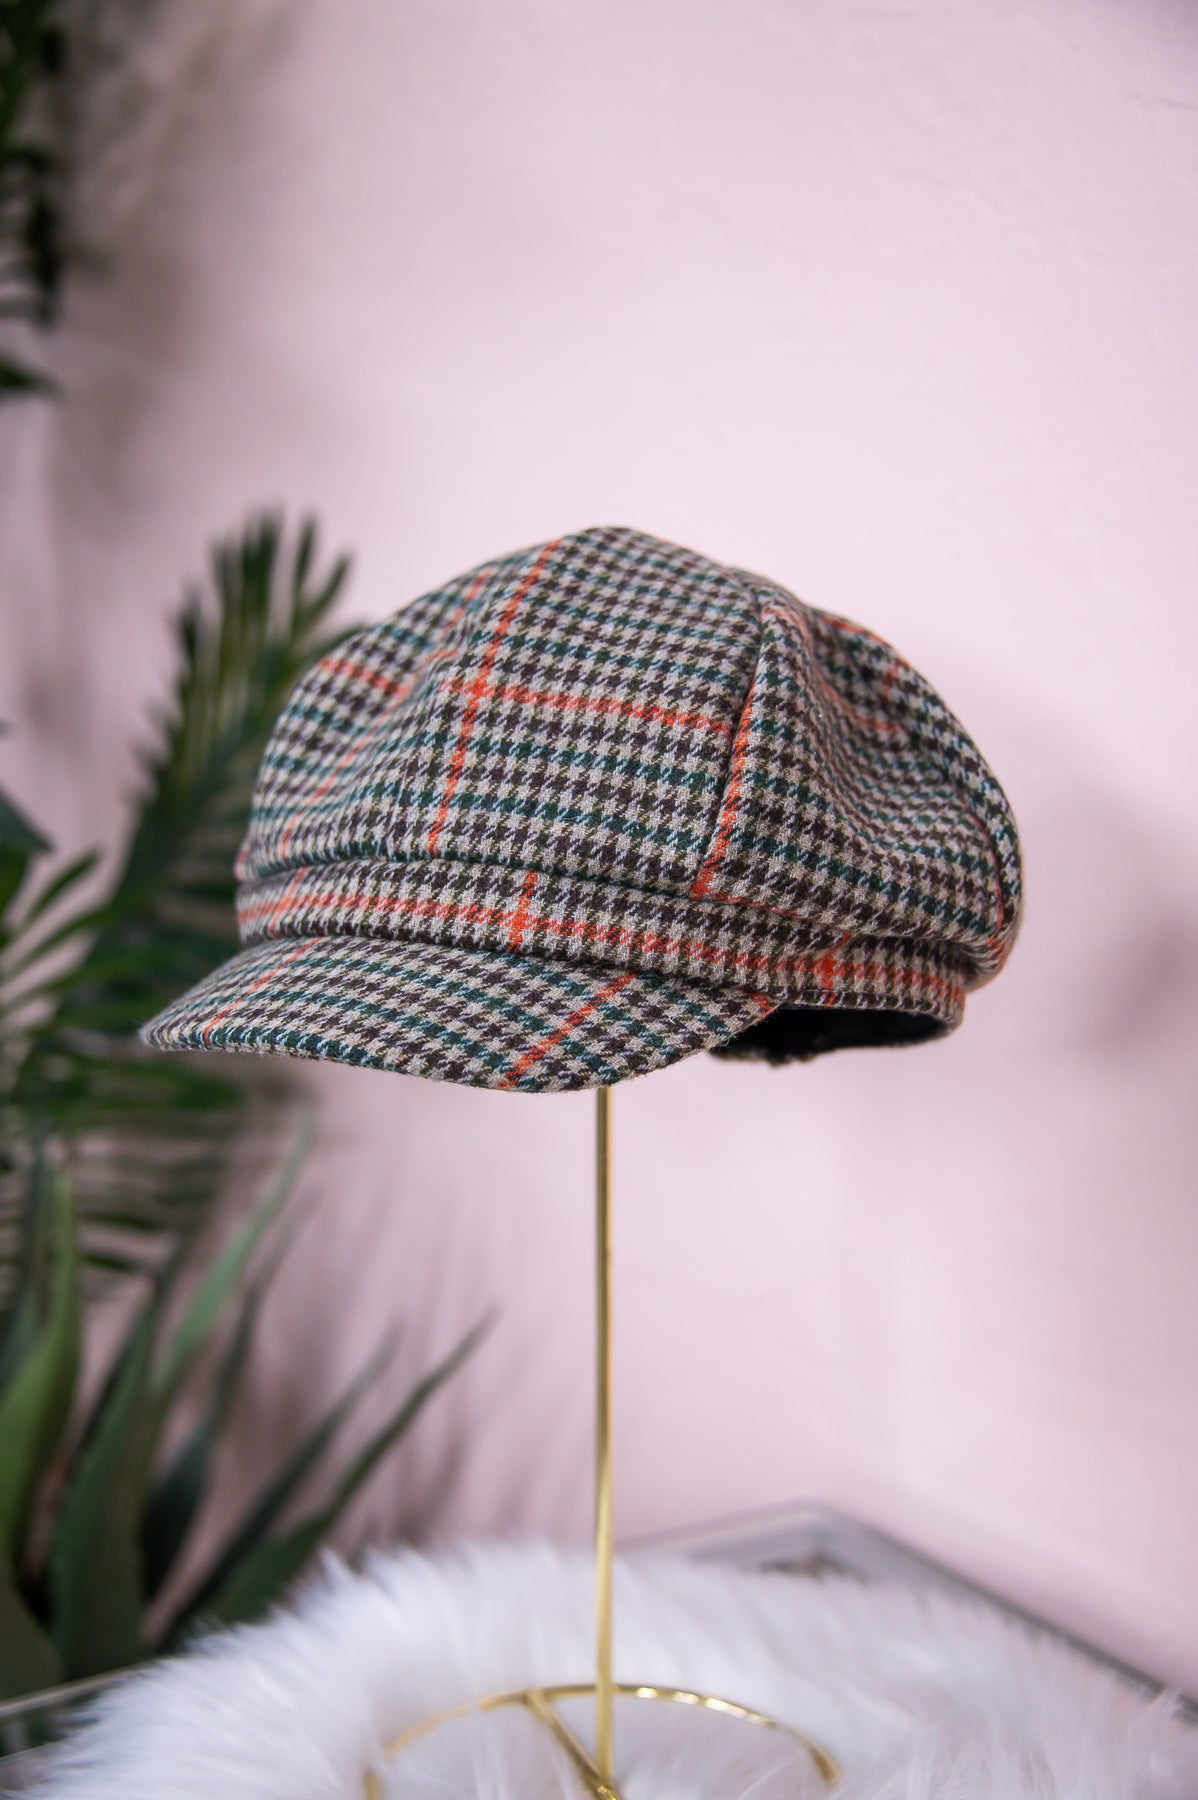 Khaki/Multi Color Houndstooth/Plaid Newsboy Hat - HAT1475KH